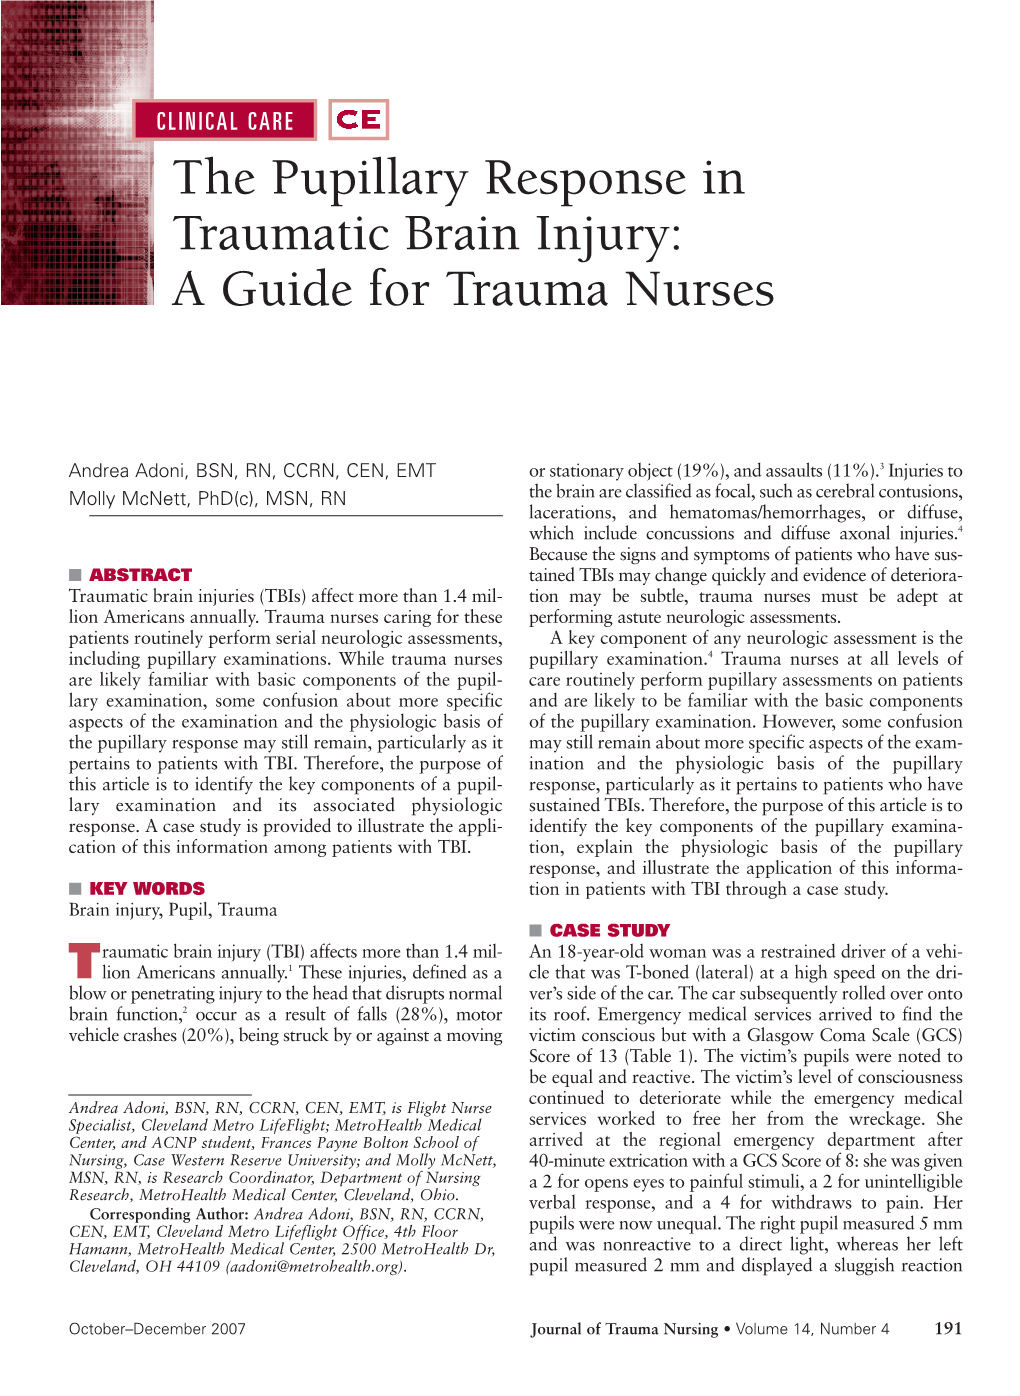 The Pupillary Response in Traumatic Brain Injury: a Guide for Trauma Nurses